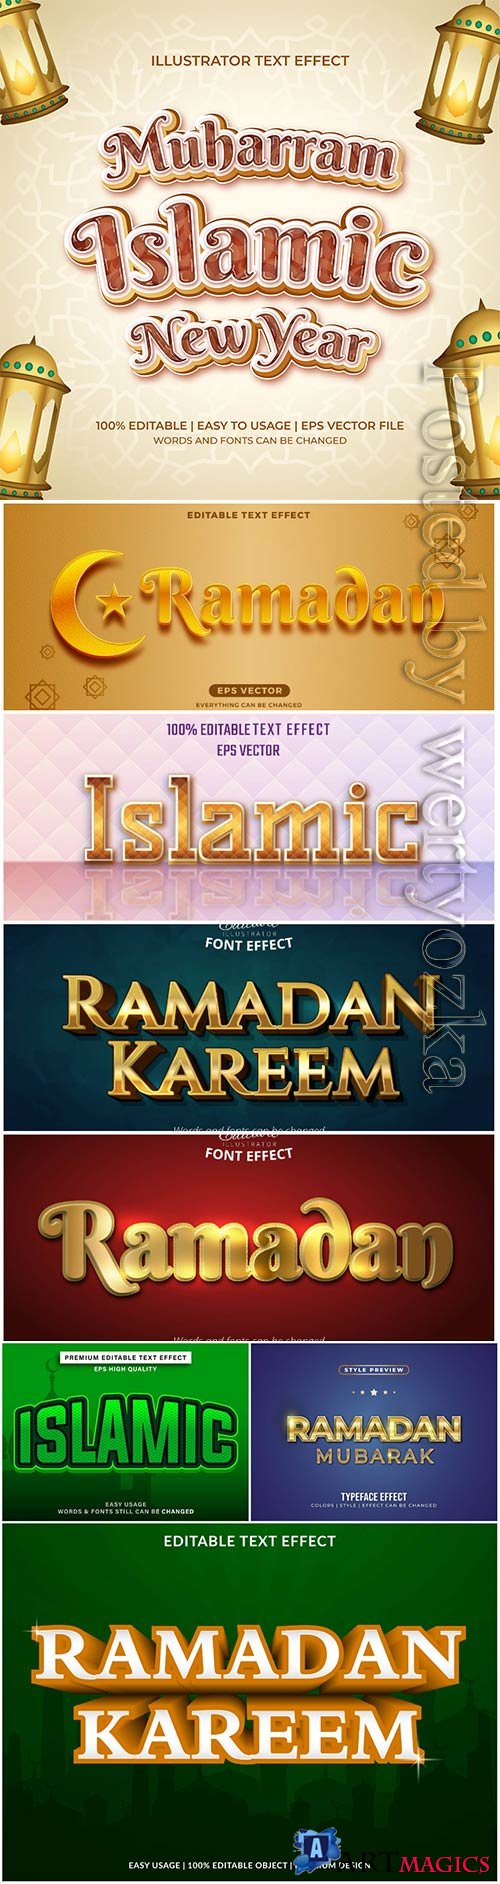 Ramadan text effect in vector